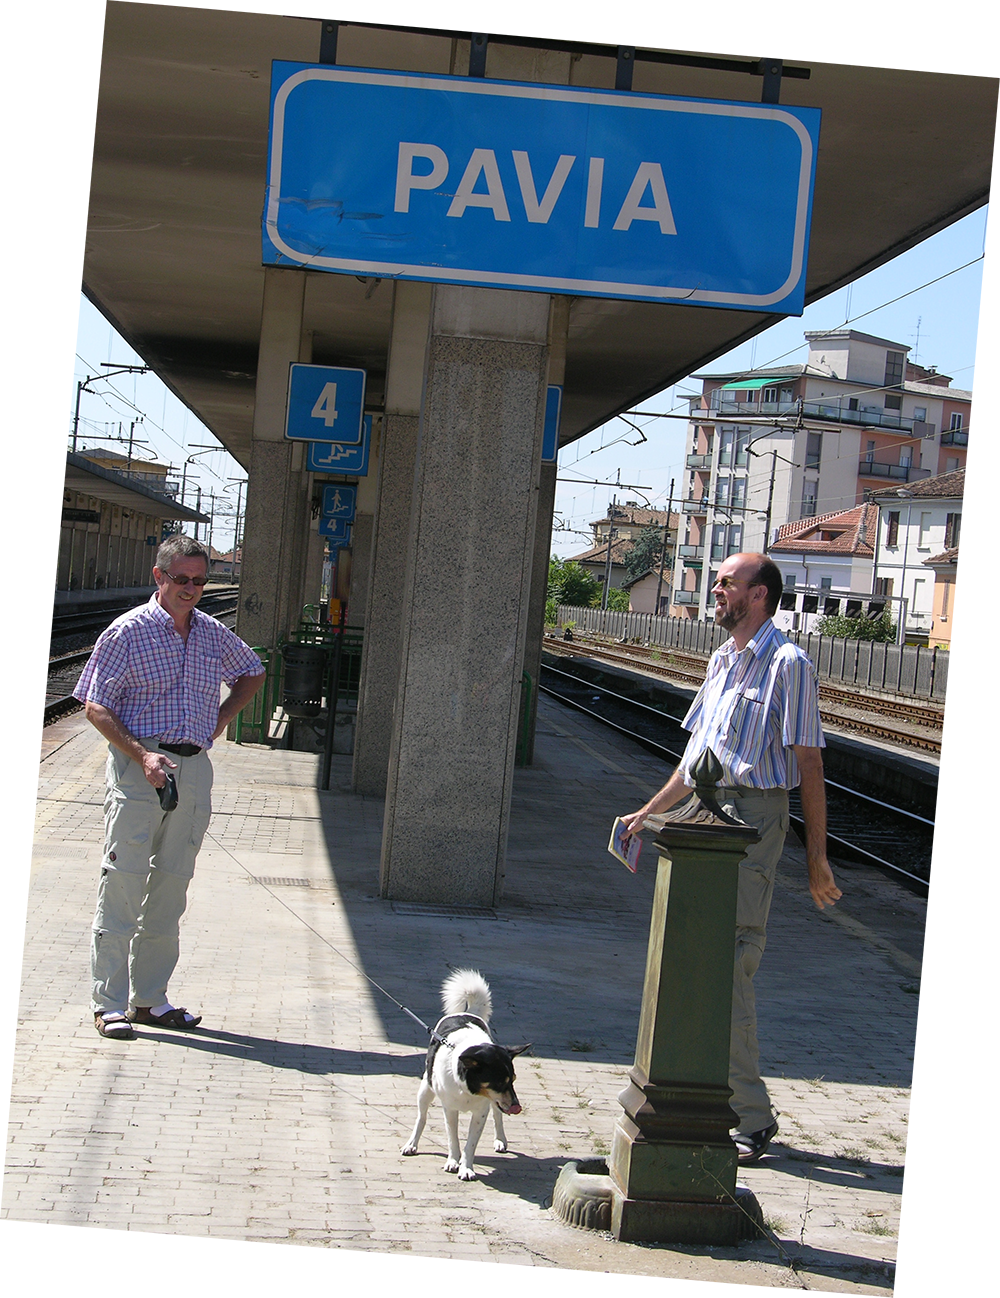 Pavia station